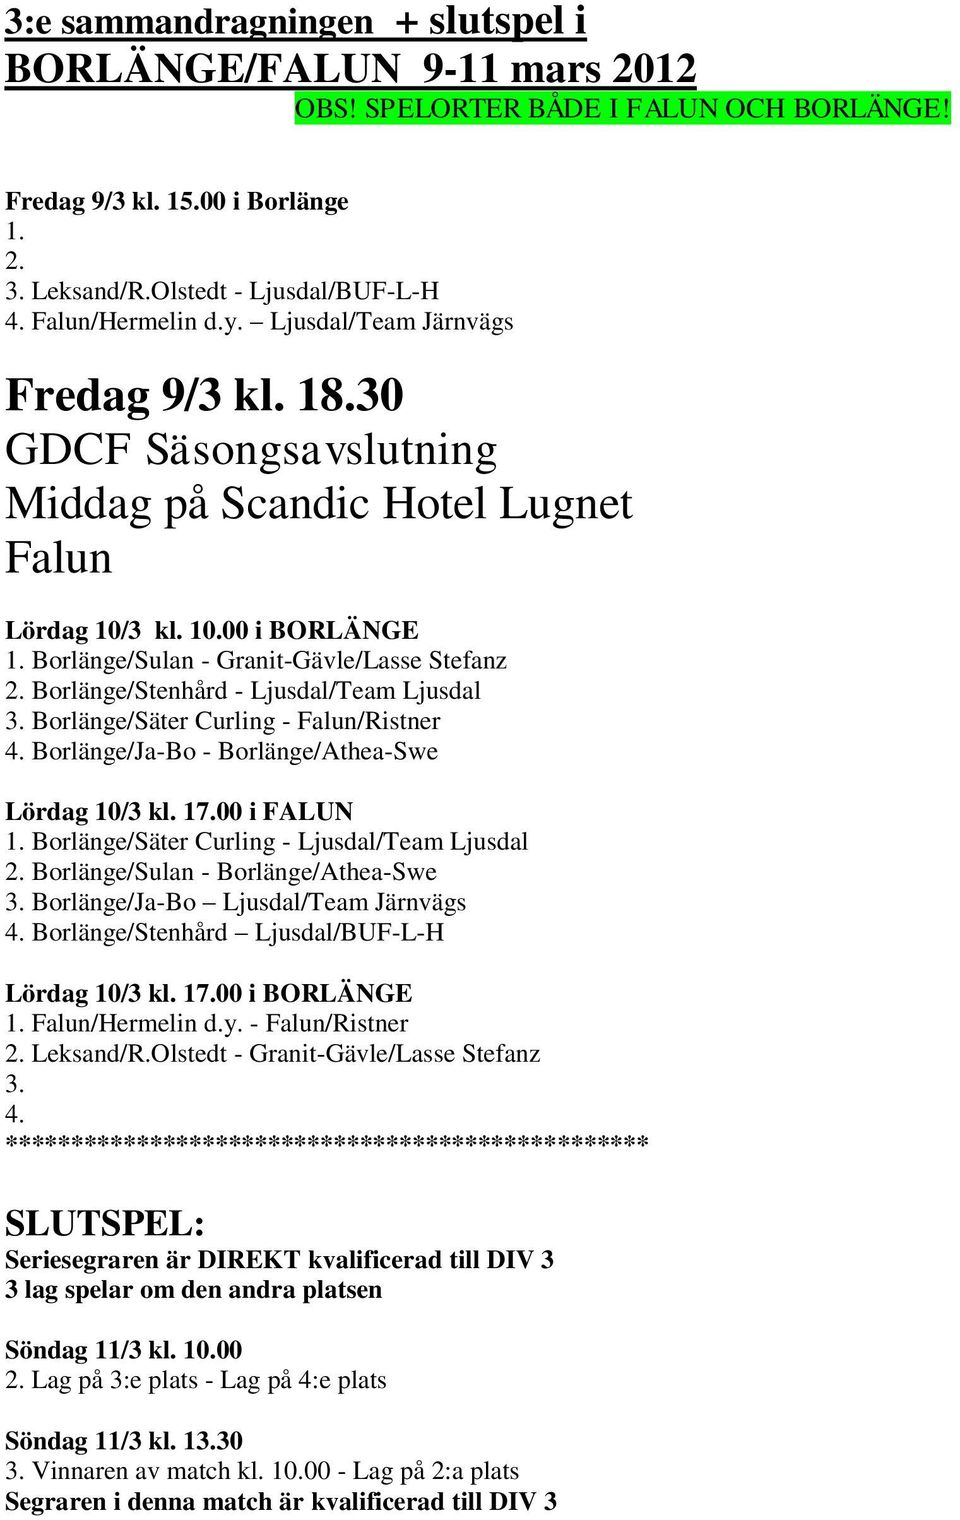 Borlänge/Sulan - Granit-Gävle/Lasse Stefanz 2. Borlänge/Stenhård - Ljusdal/Team Ljusdal 3. Borlänge/Säter Curling - Falun/Ristner 4. Borlänge/Ja-Bo - Borlänge/Athea-Swe Lördag 10/3 kl. 17.